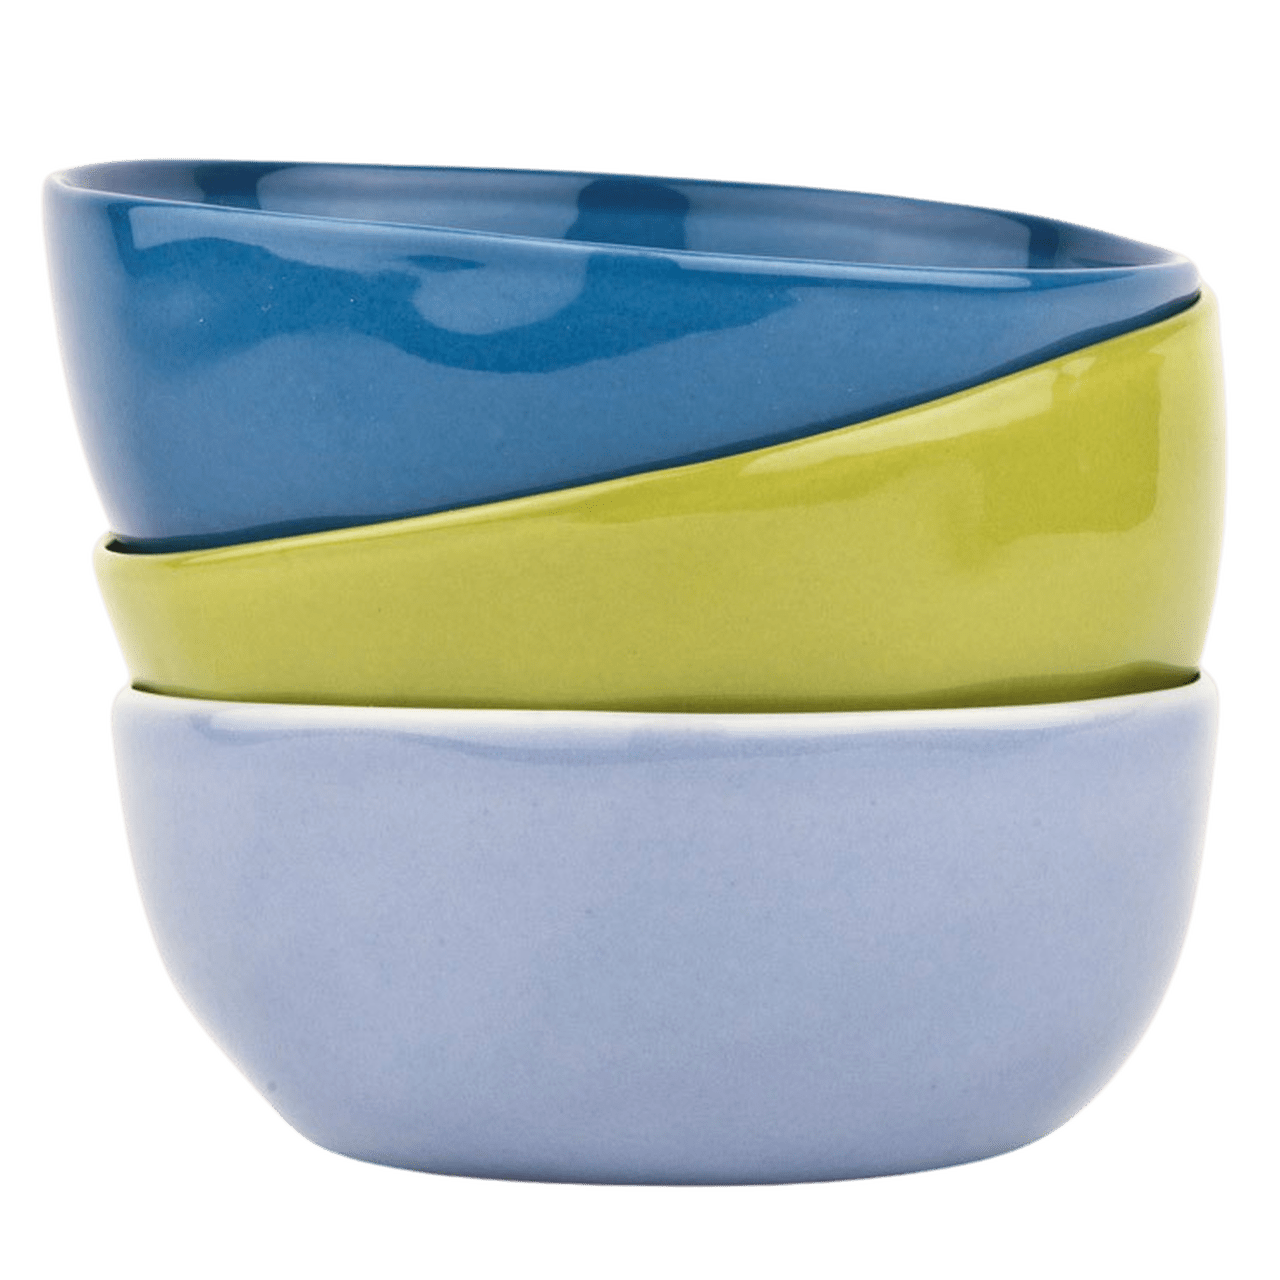 Deep Blue Large Ceramic Dipping Bowl